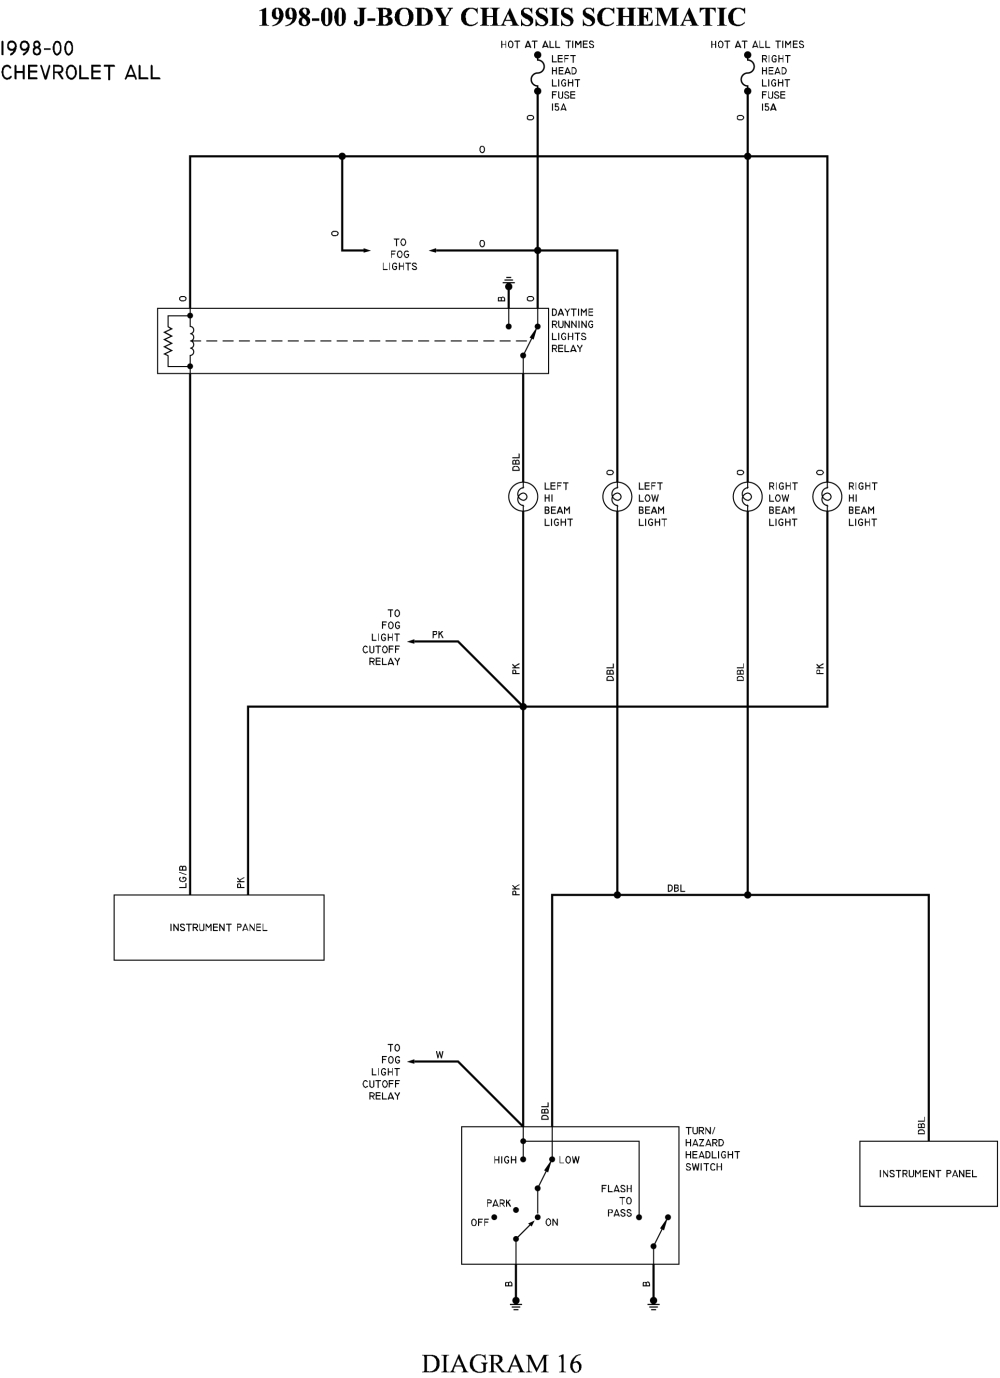 1998 cavalier wiring diagram wiring diagram metarepair guides wiring diagrams wiring diagrams autozone com 1998 chevy